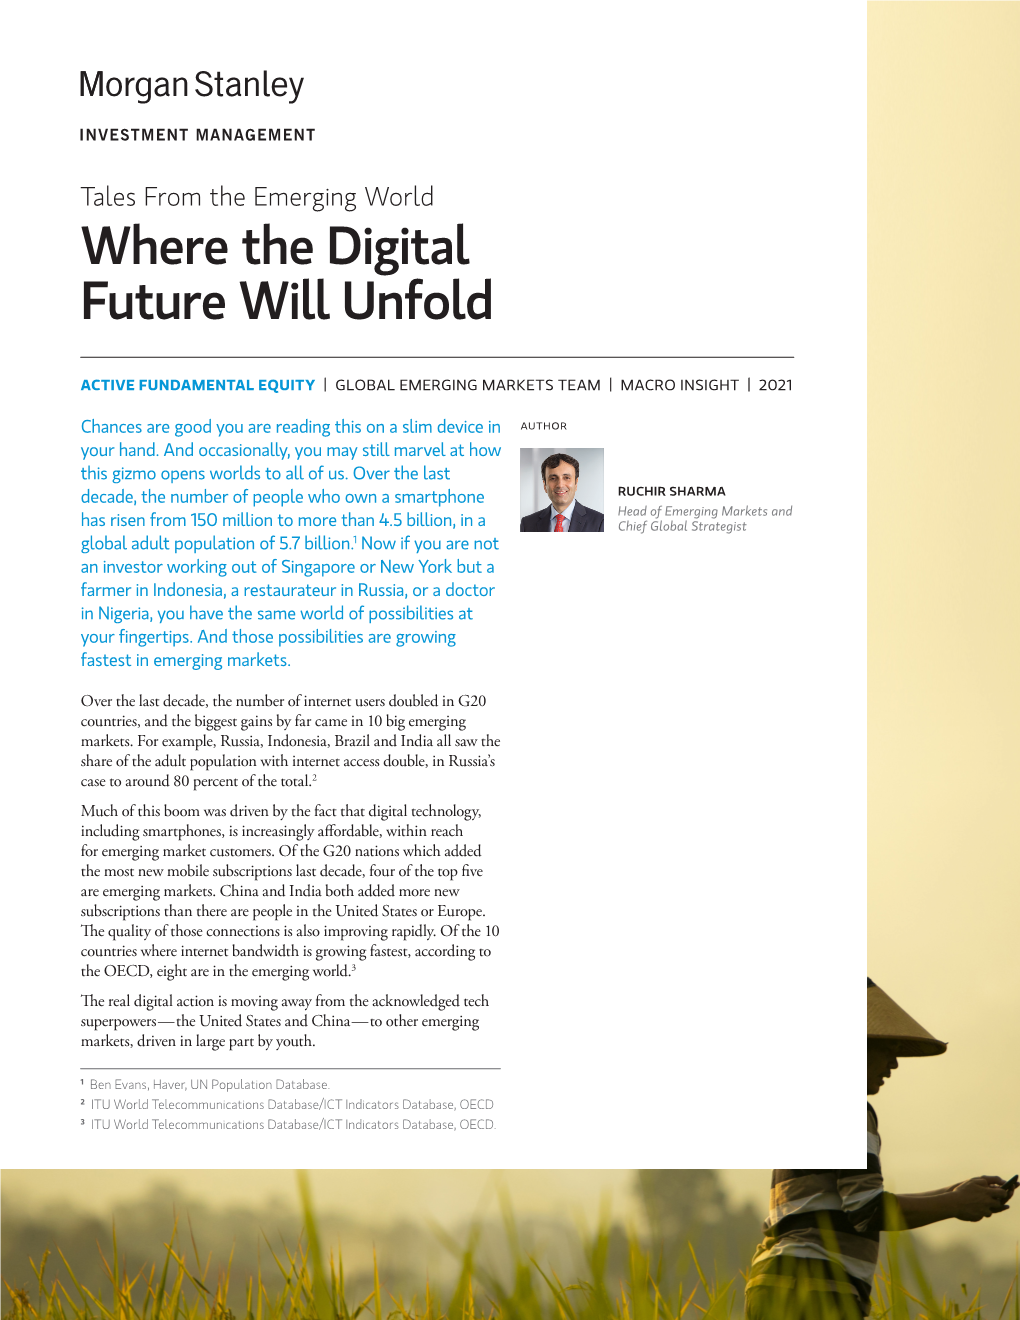 Where the Digital Future Will Unfold